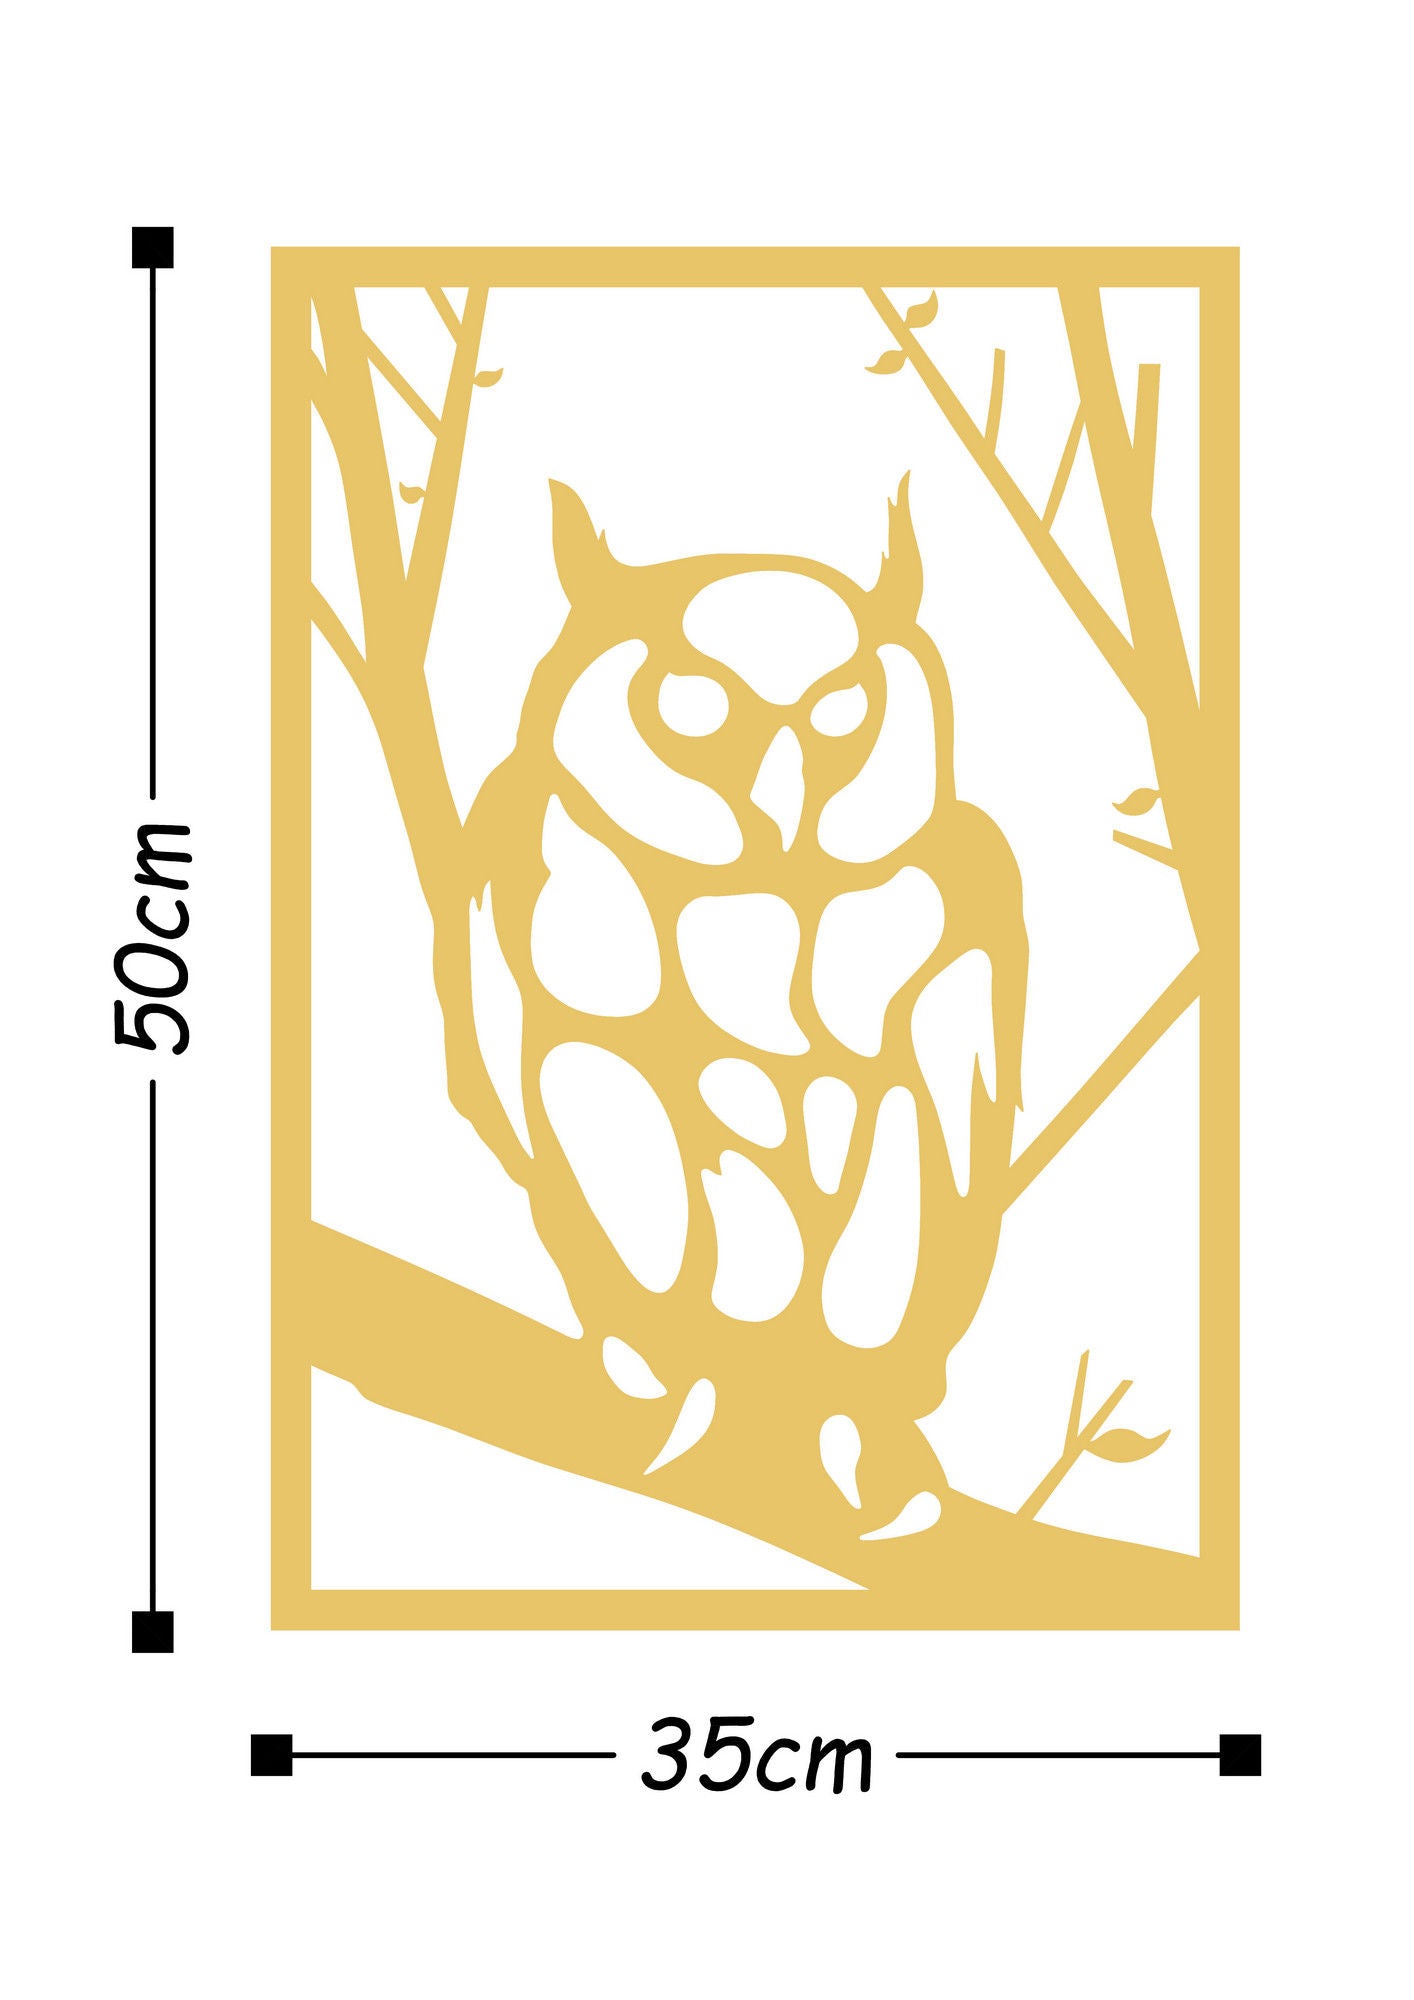 Owl Metal Decor - Gold - Decorative Metal Wall Accessory